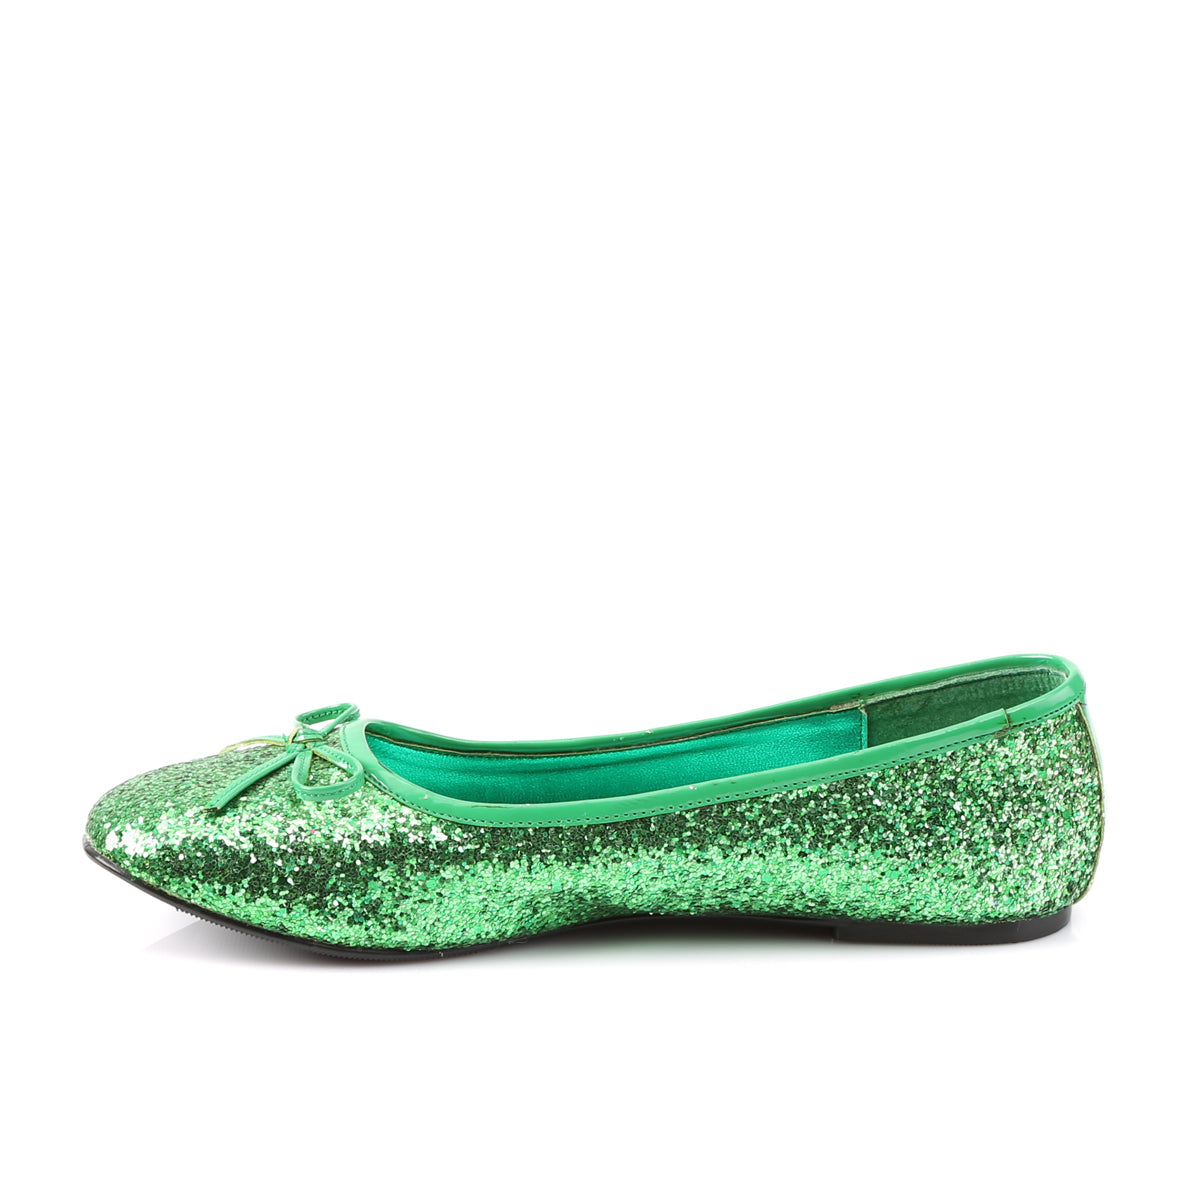 STAR-16G Funtasma Green Glitter Women's Costume Shoes Funtasma Costume Shoes 